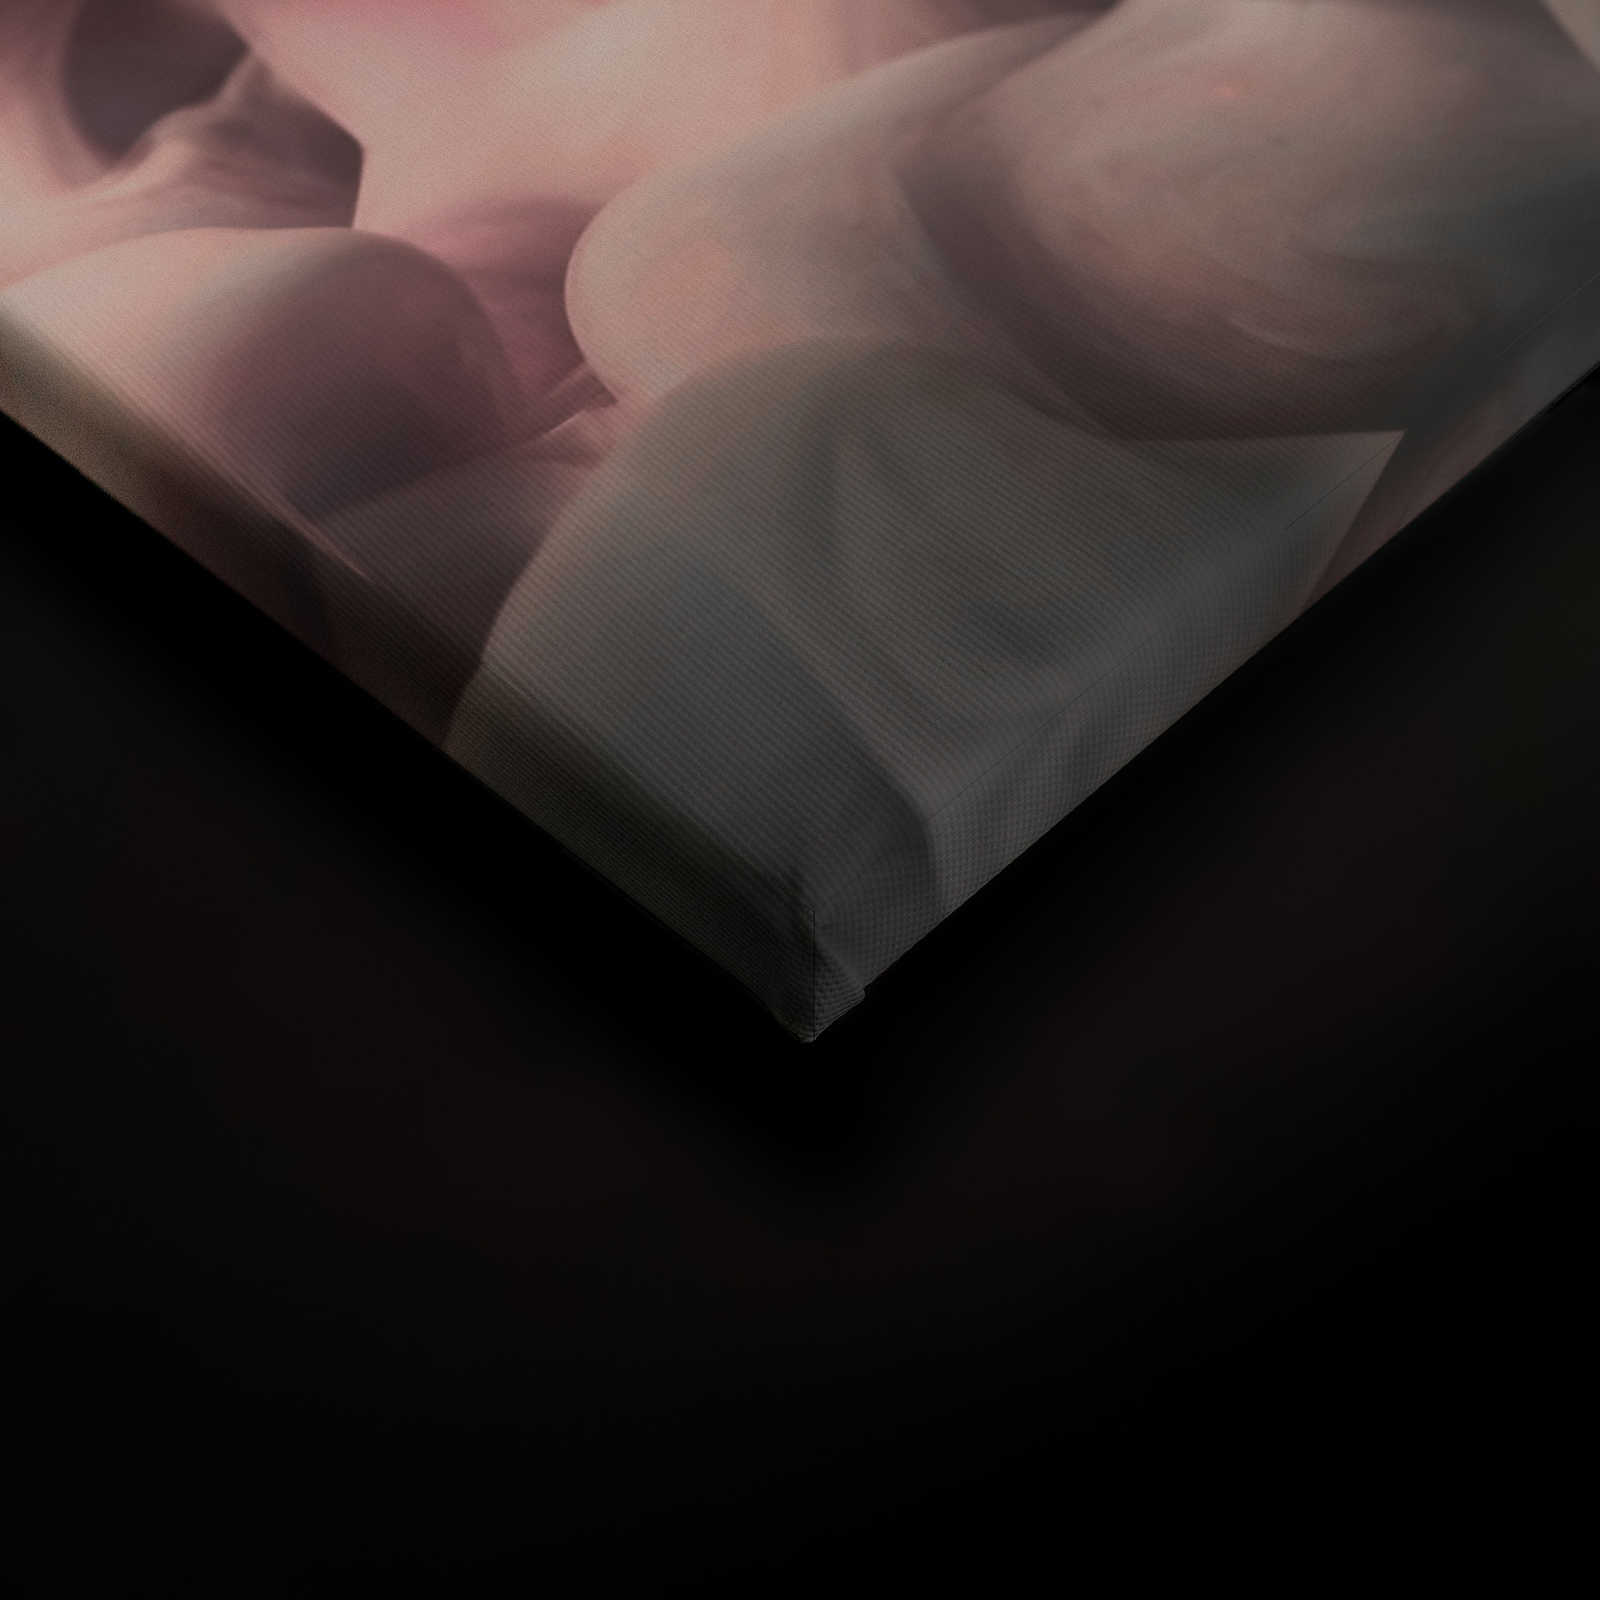             Coloured Smoke Canvas | Pink, Grey, White - 0.90 m x 0.60 m
        